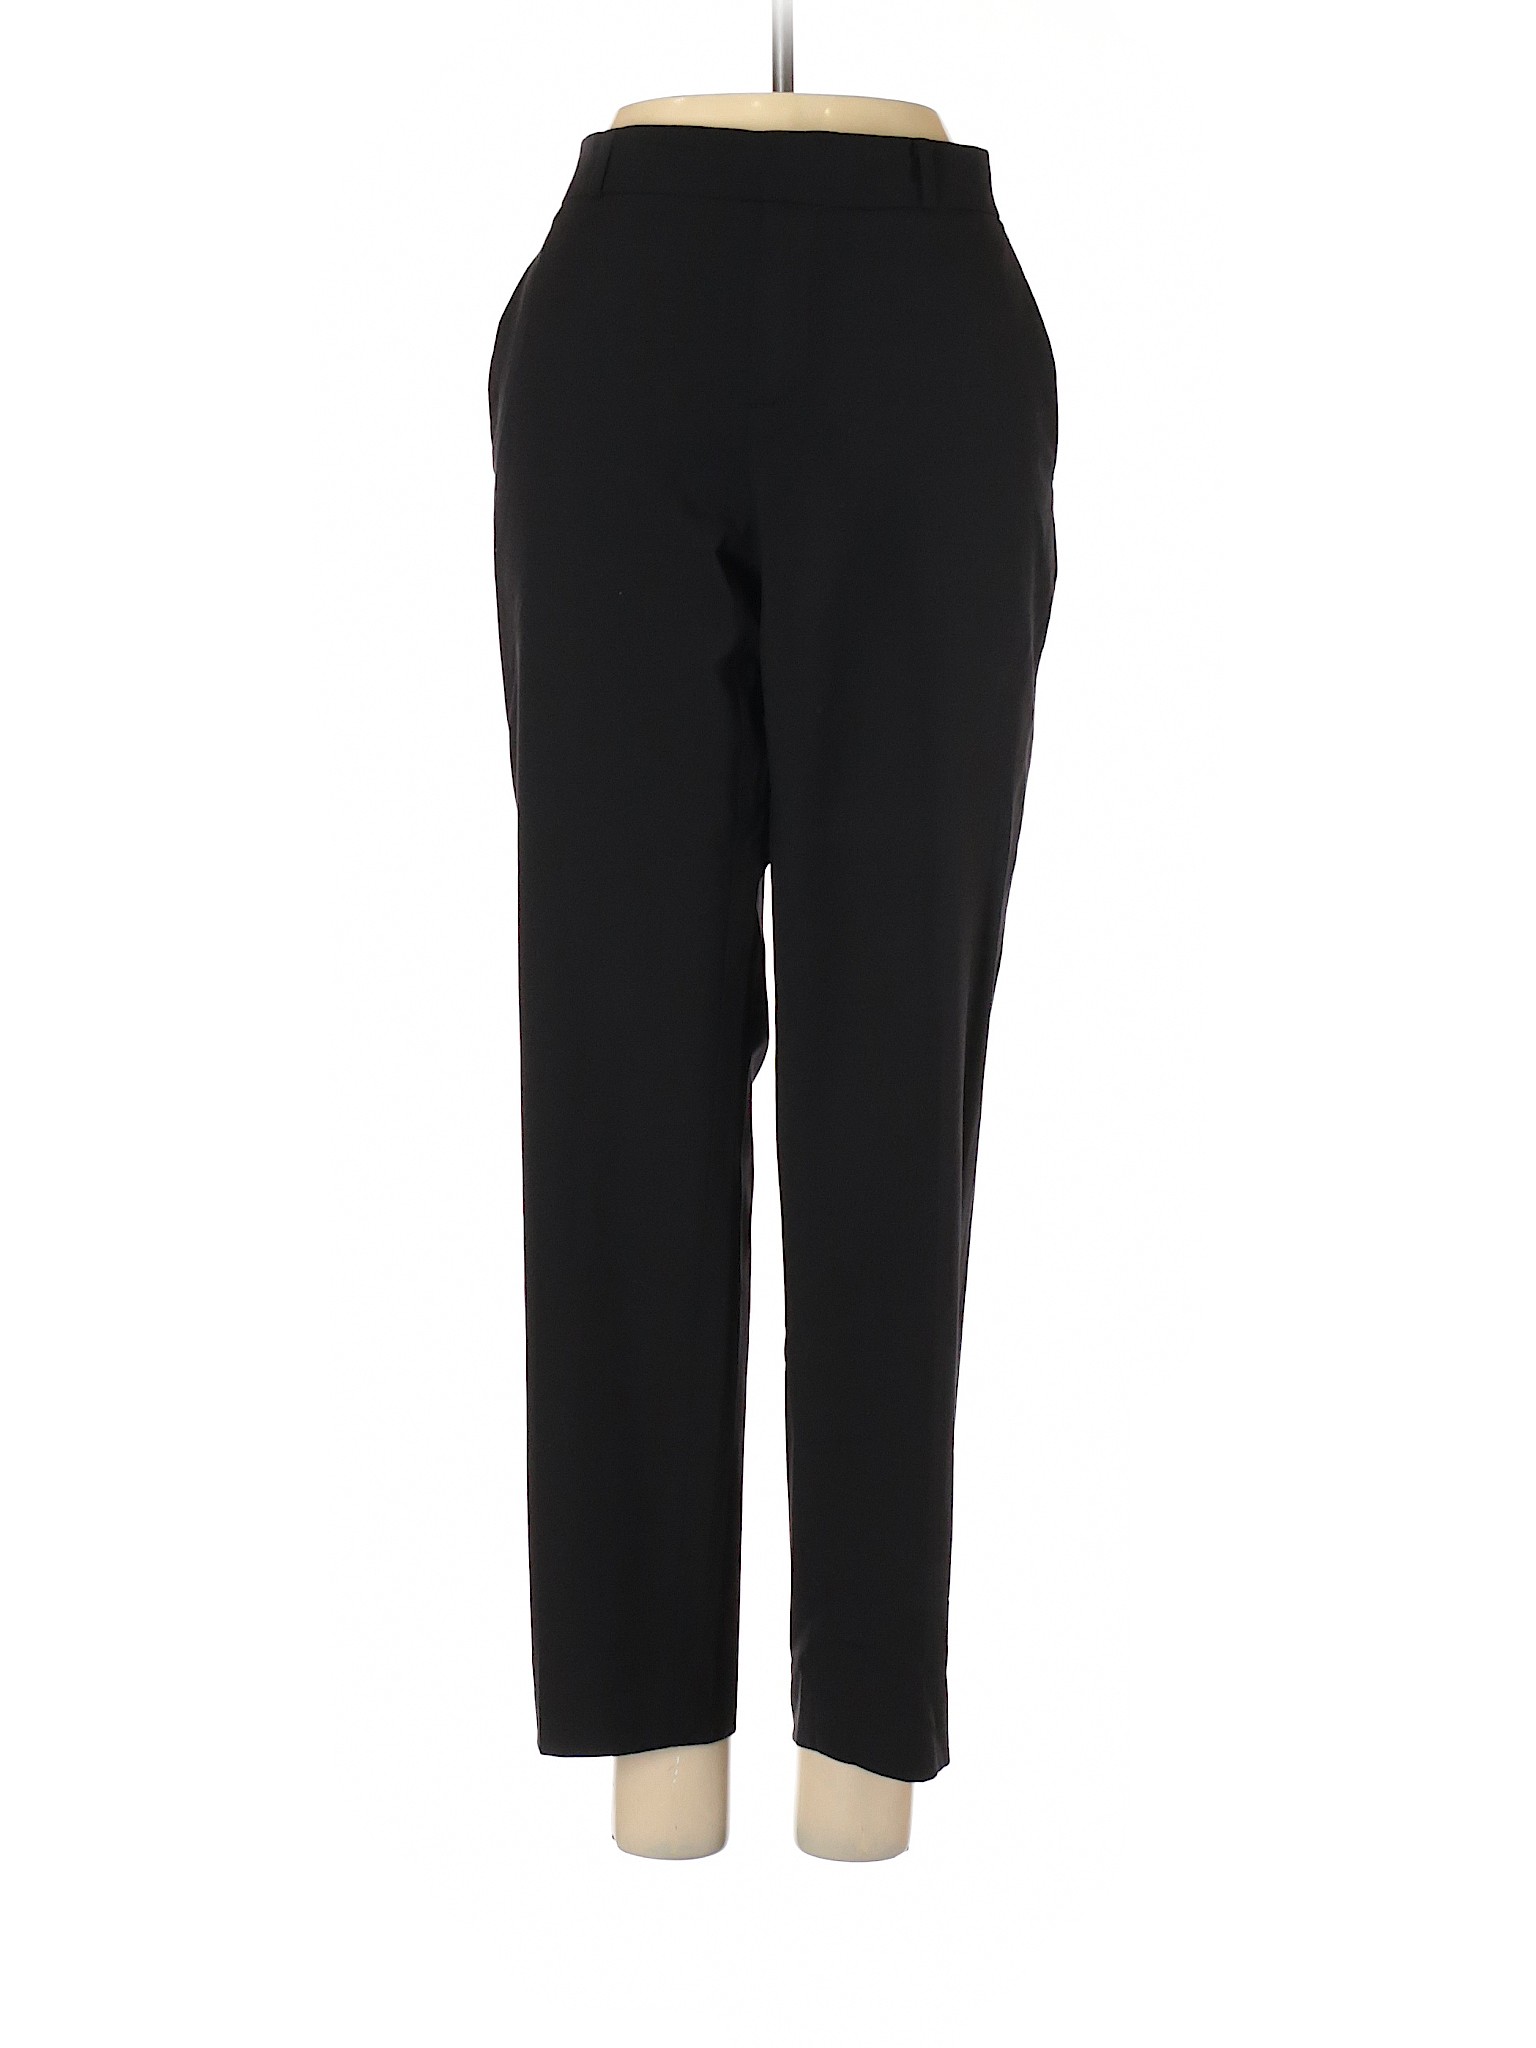 Banana Republic Women Black Wool Pants 4 | eBay